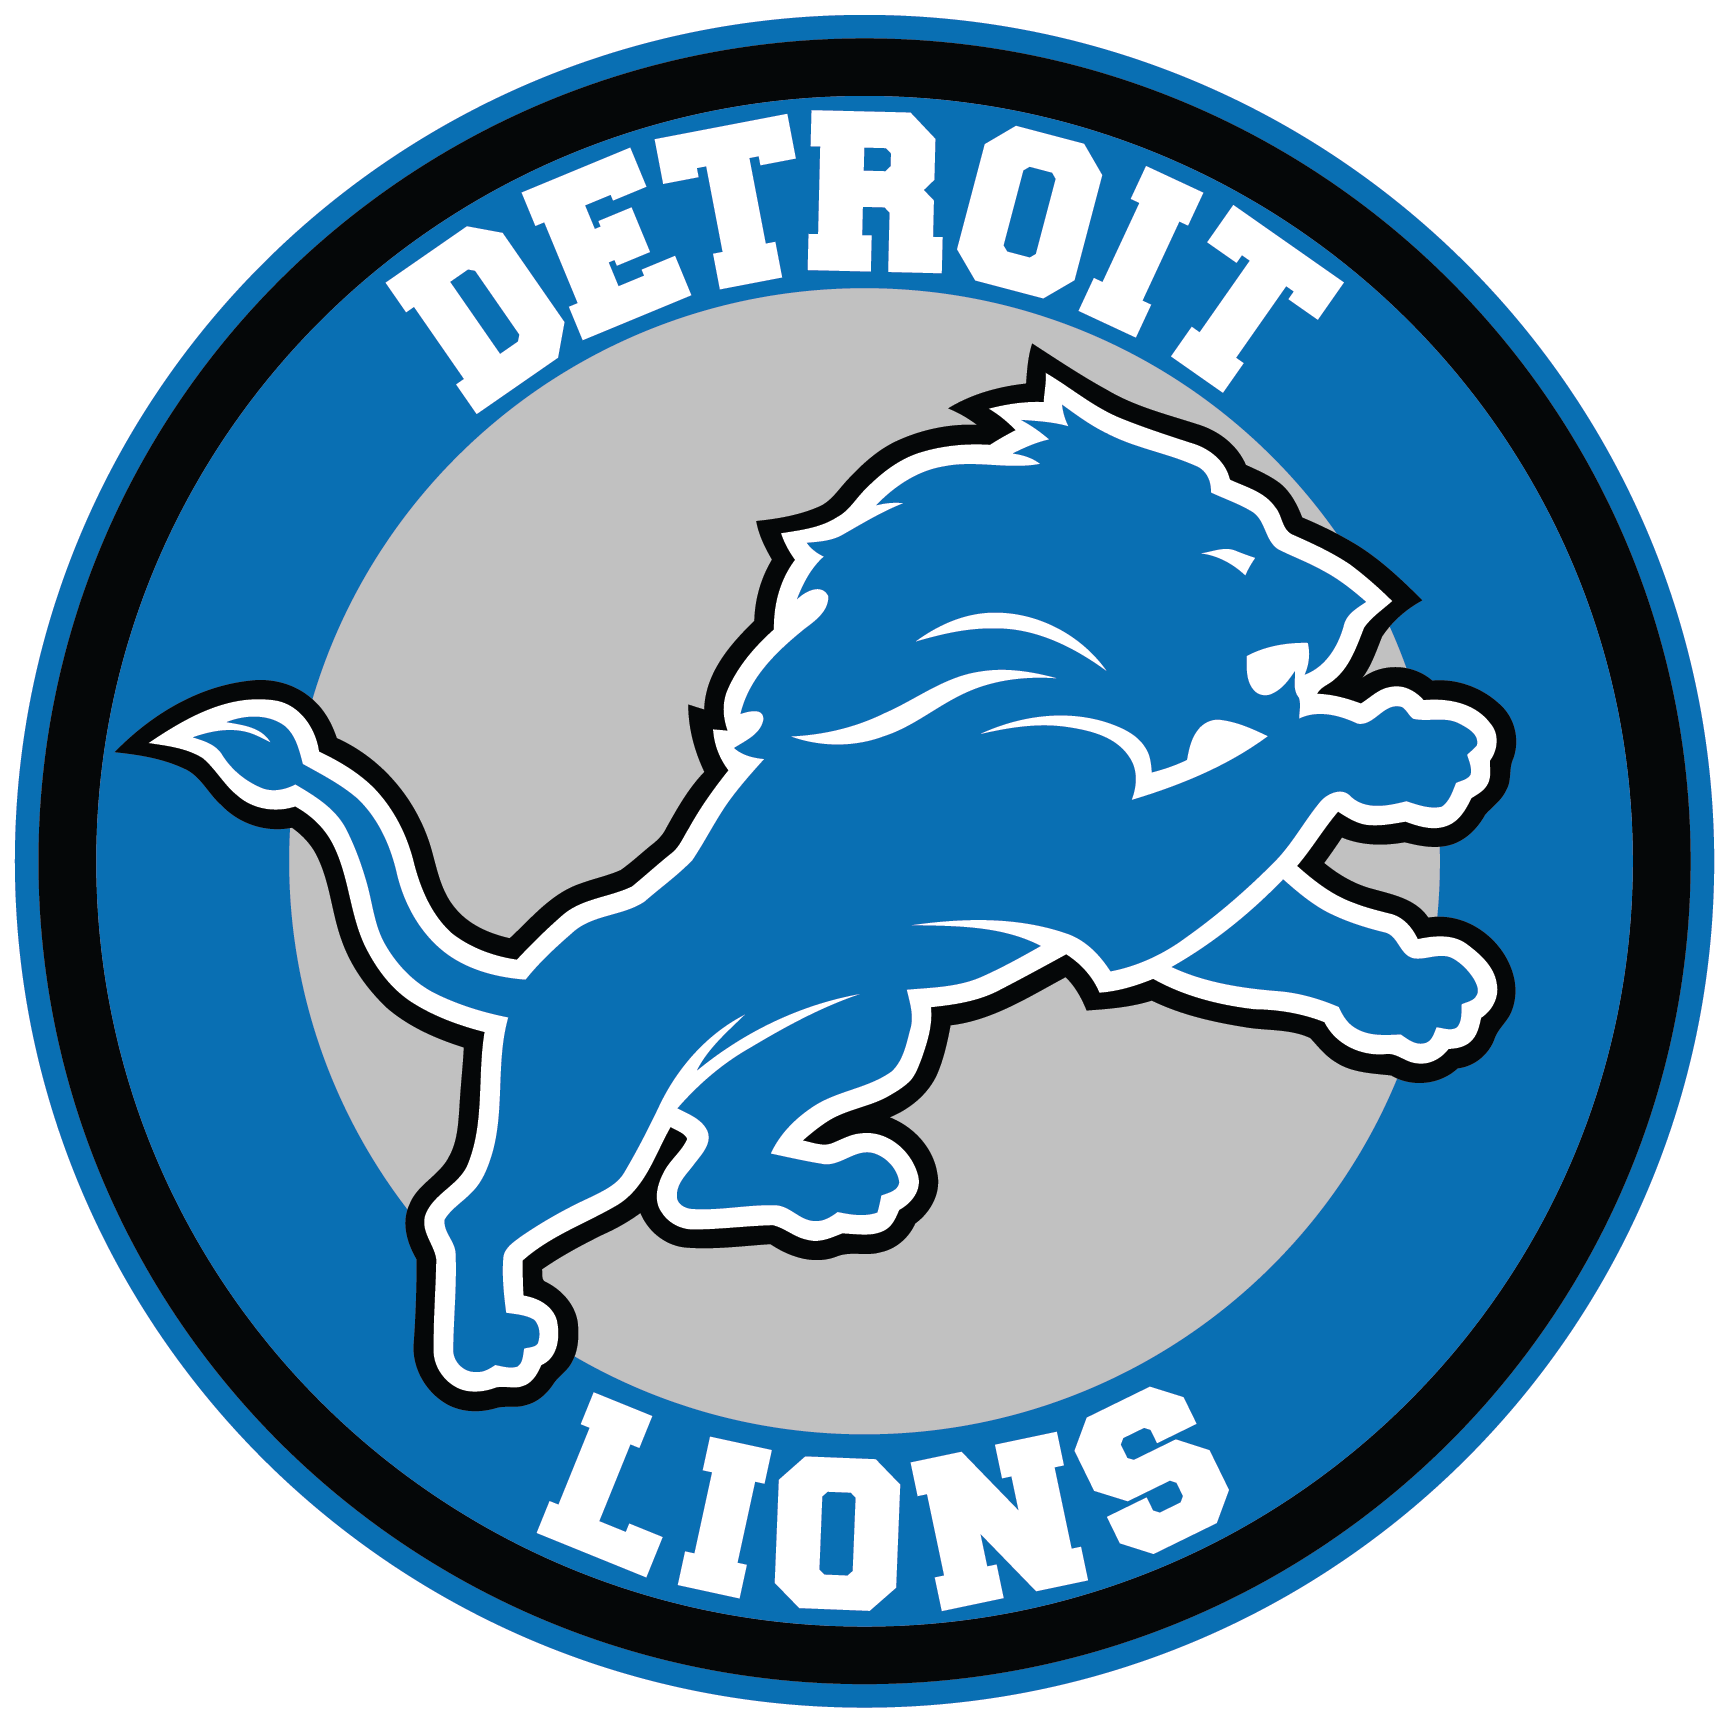 Detroit Lions Circle Logo Vinyl Decal / Sticker 10 sizes!! | Sportz For Less